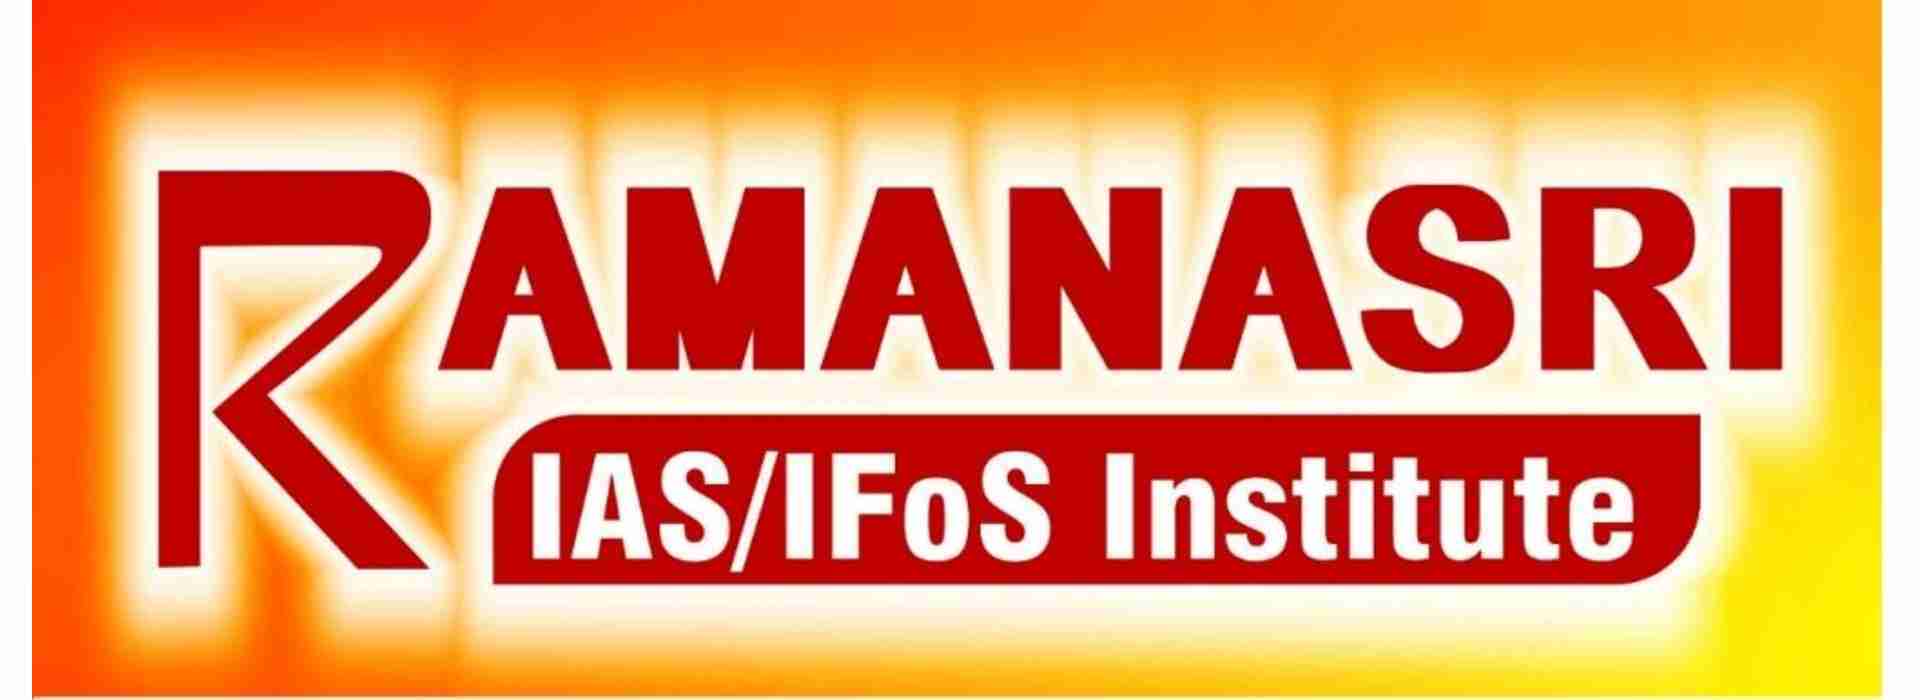 Ramanasri IAS Institute About us image Ramanasri_IAS_Logo_Banner